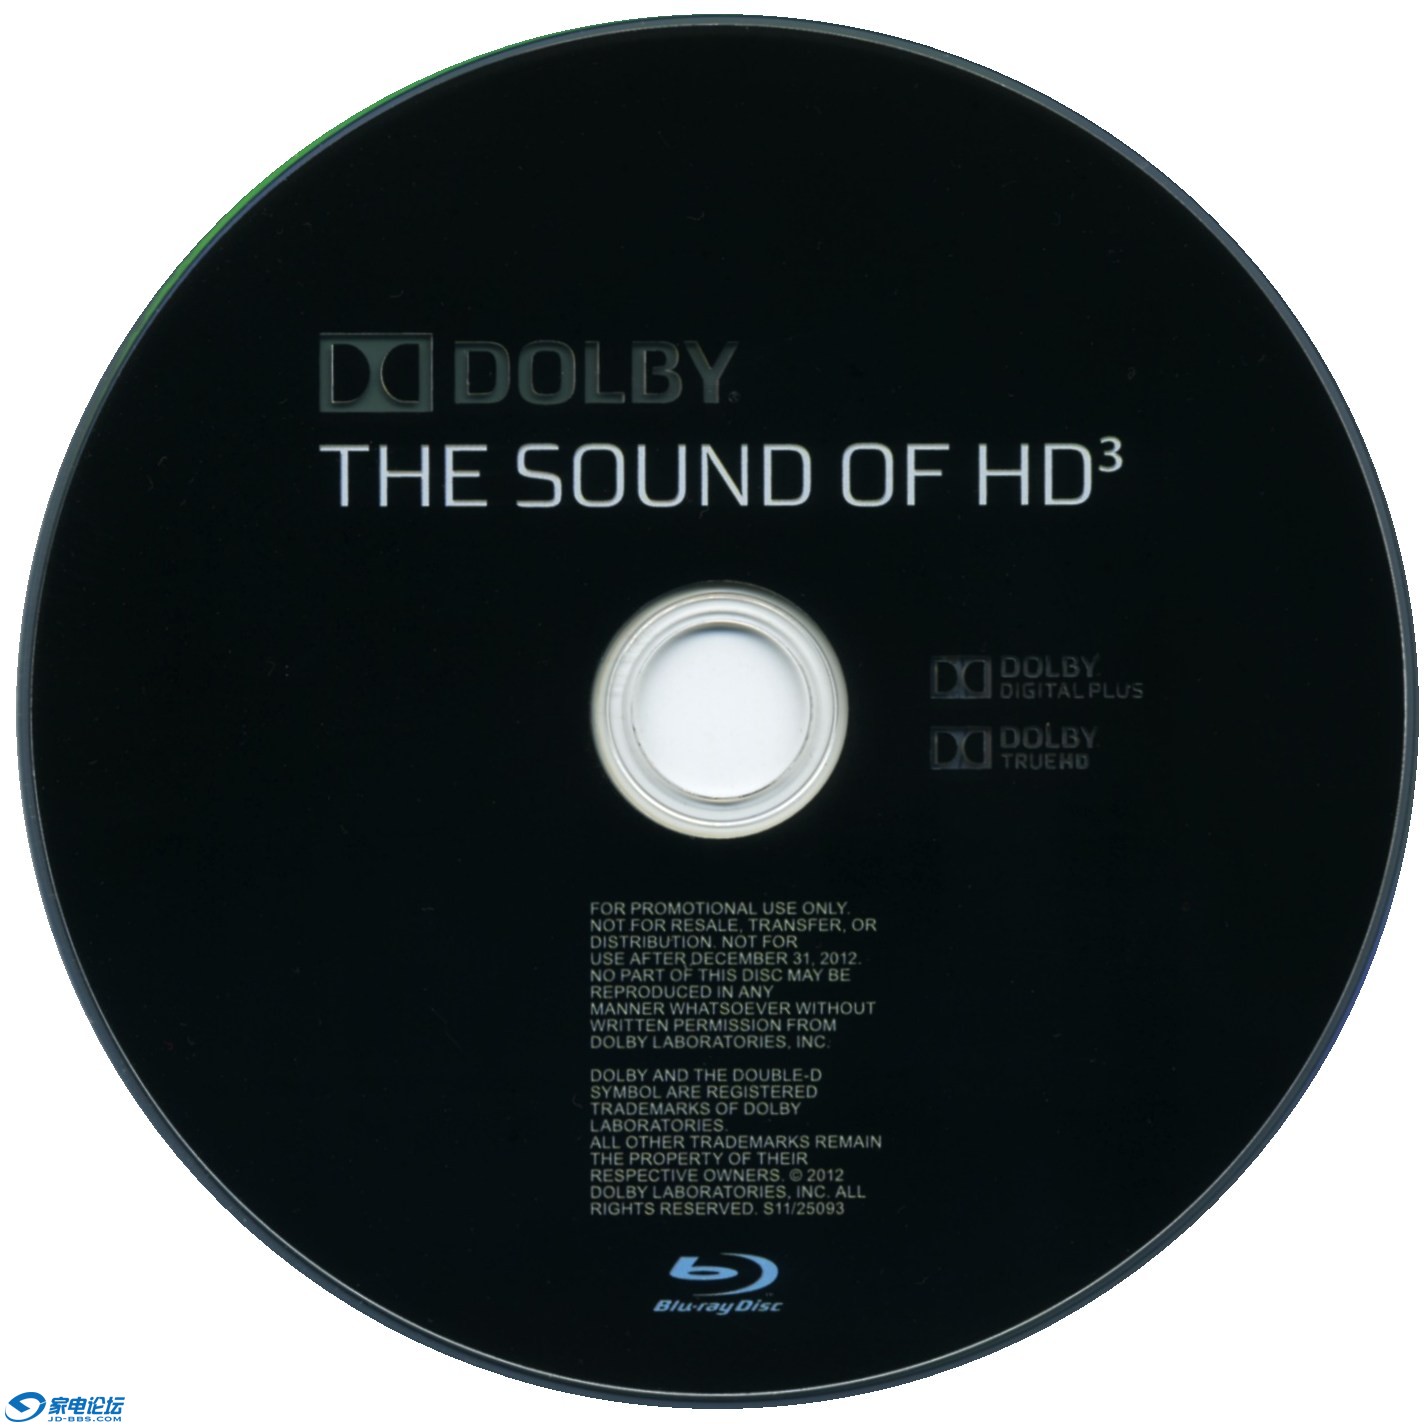 dolby-the-sound-of-hd3-cbig.jpg